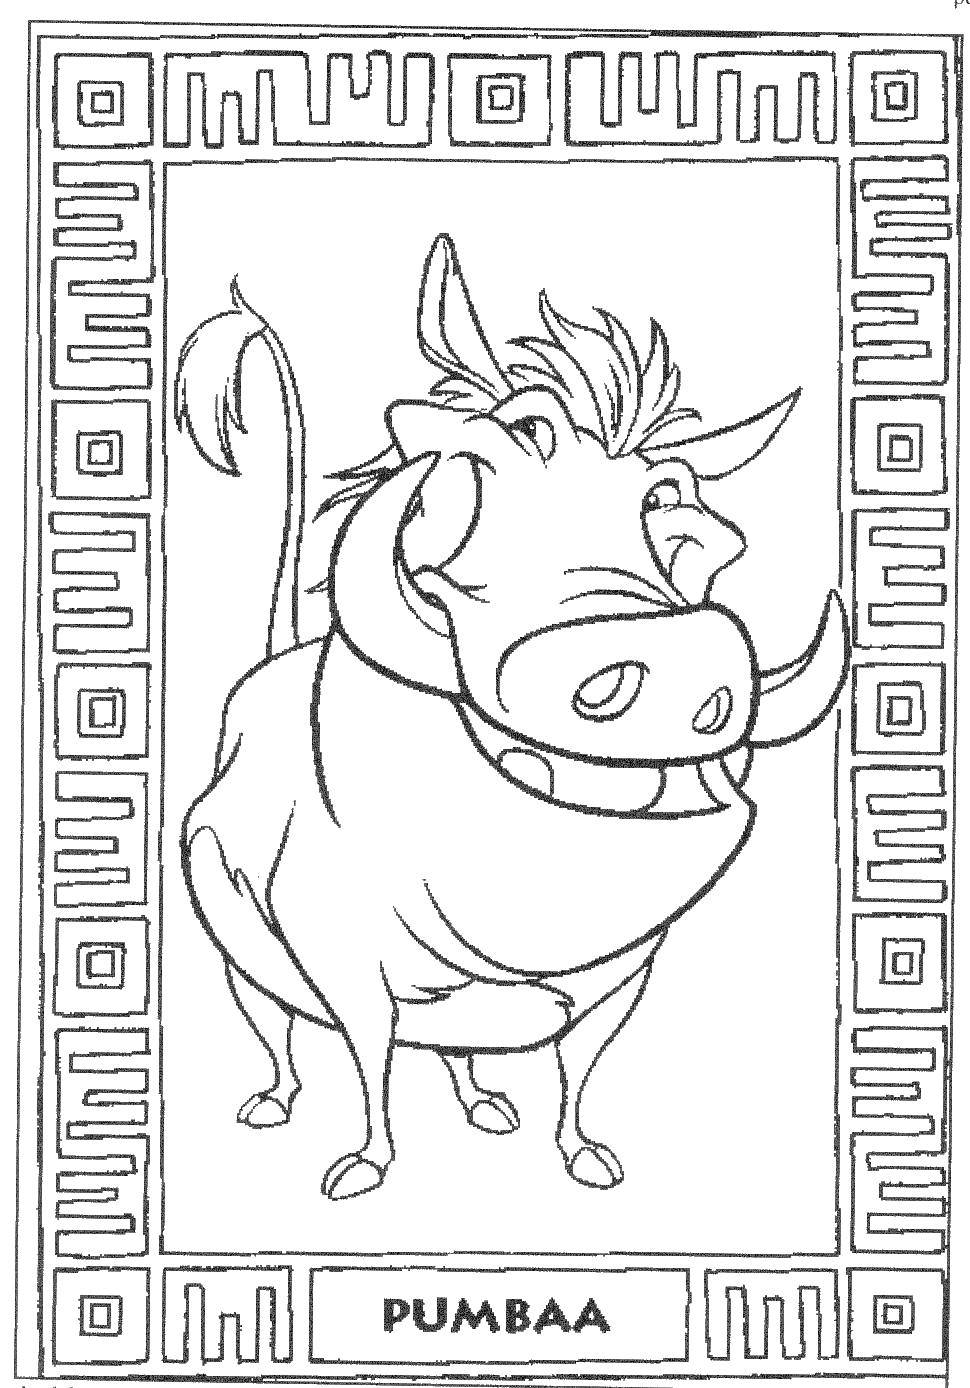 Coloring Happy Pumbaa. Category Cartoon character. Tags:  Cartoon character.